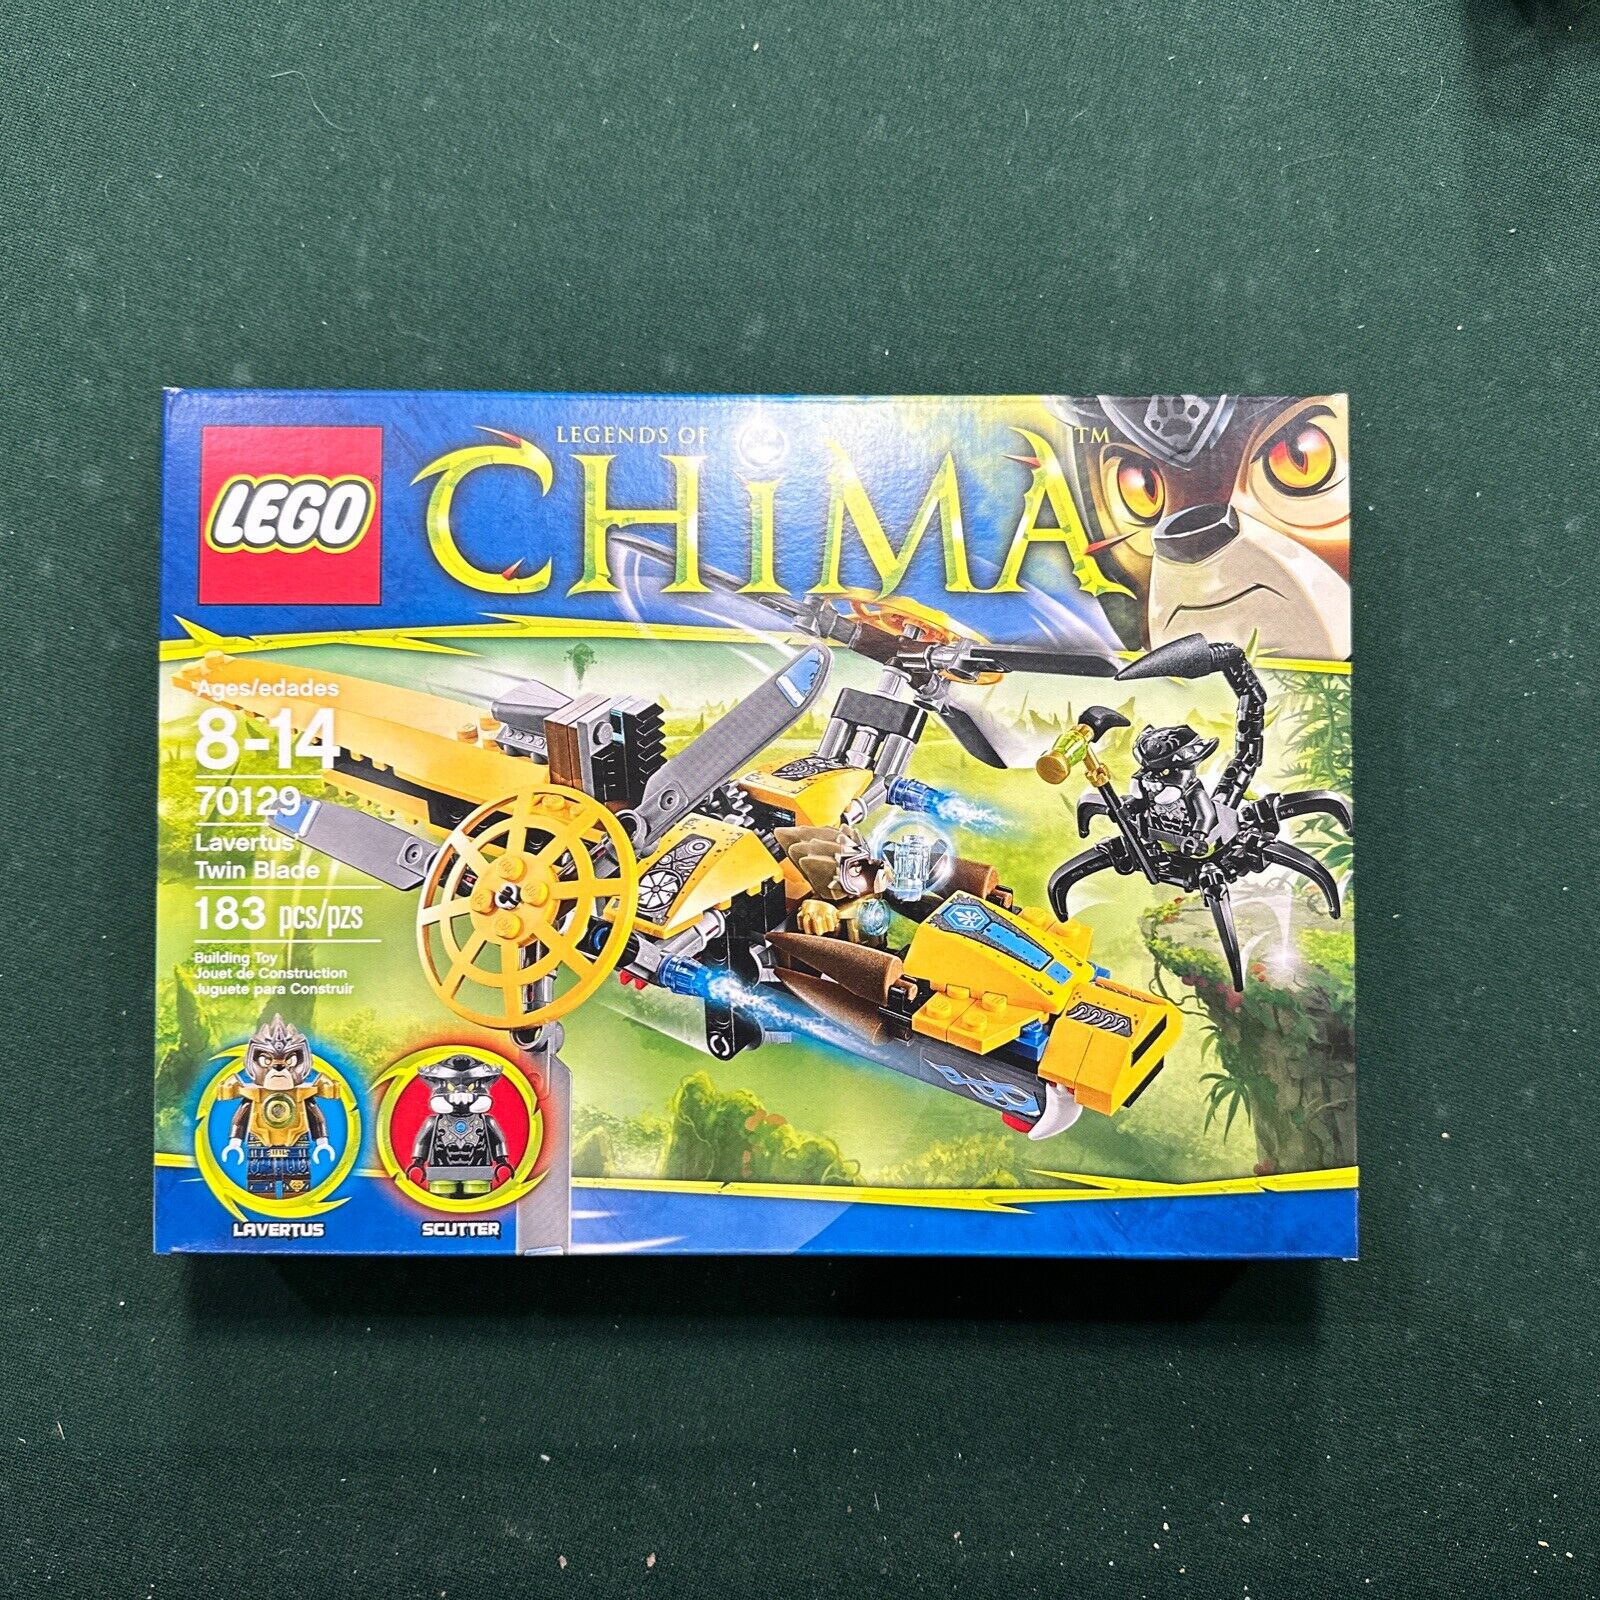 LEGO SET 70129 LEGENDS OF CHIMA *LAVERTUS' TWIN BLADE* NEW SEALED 2014 RETIRED